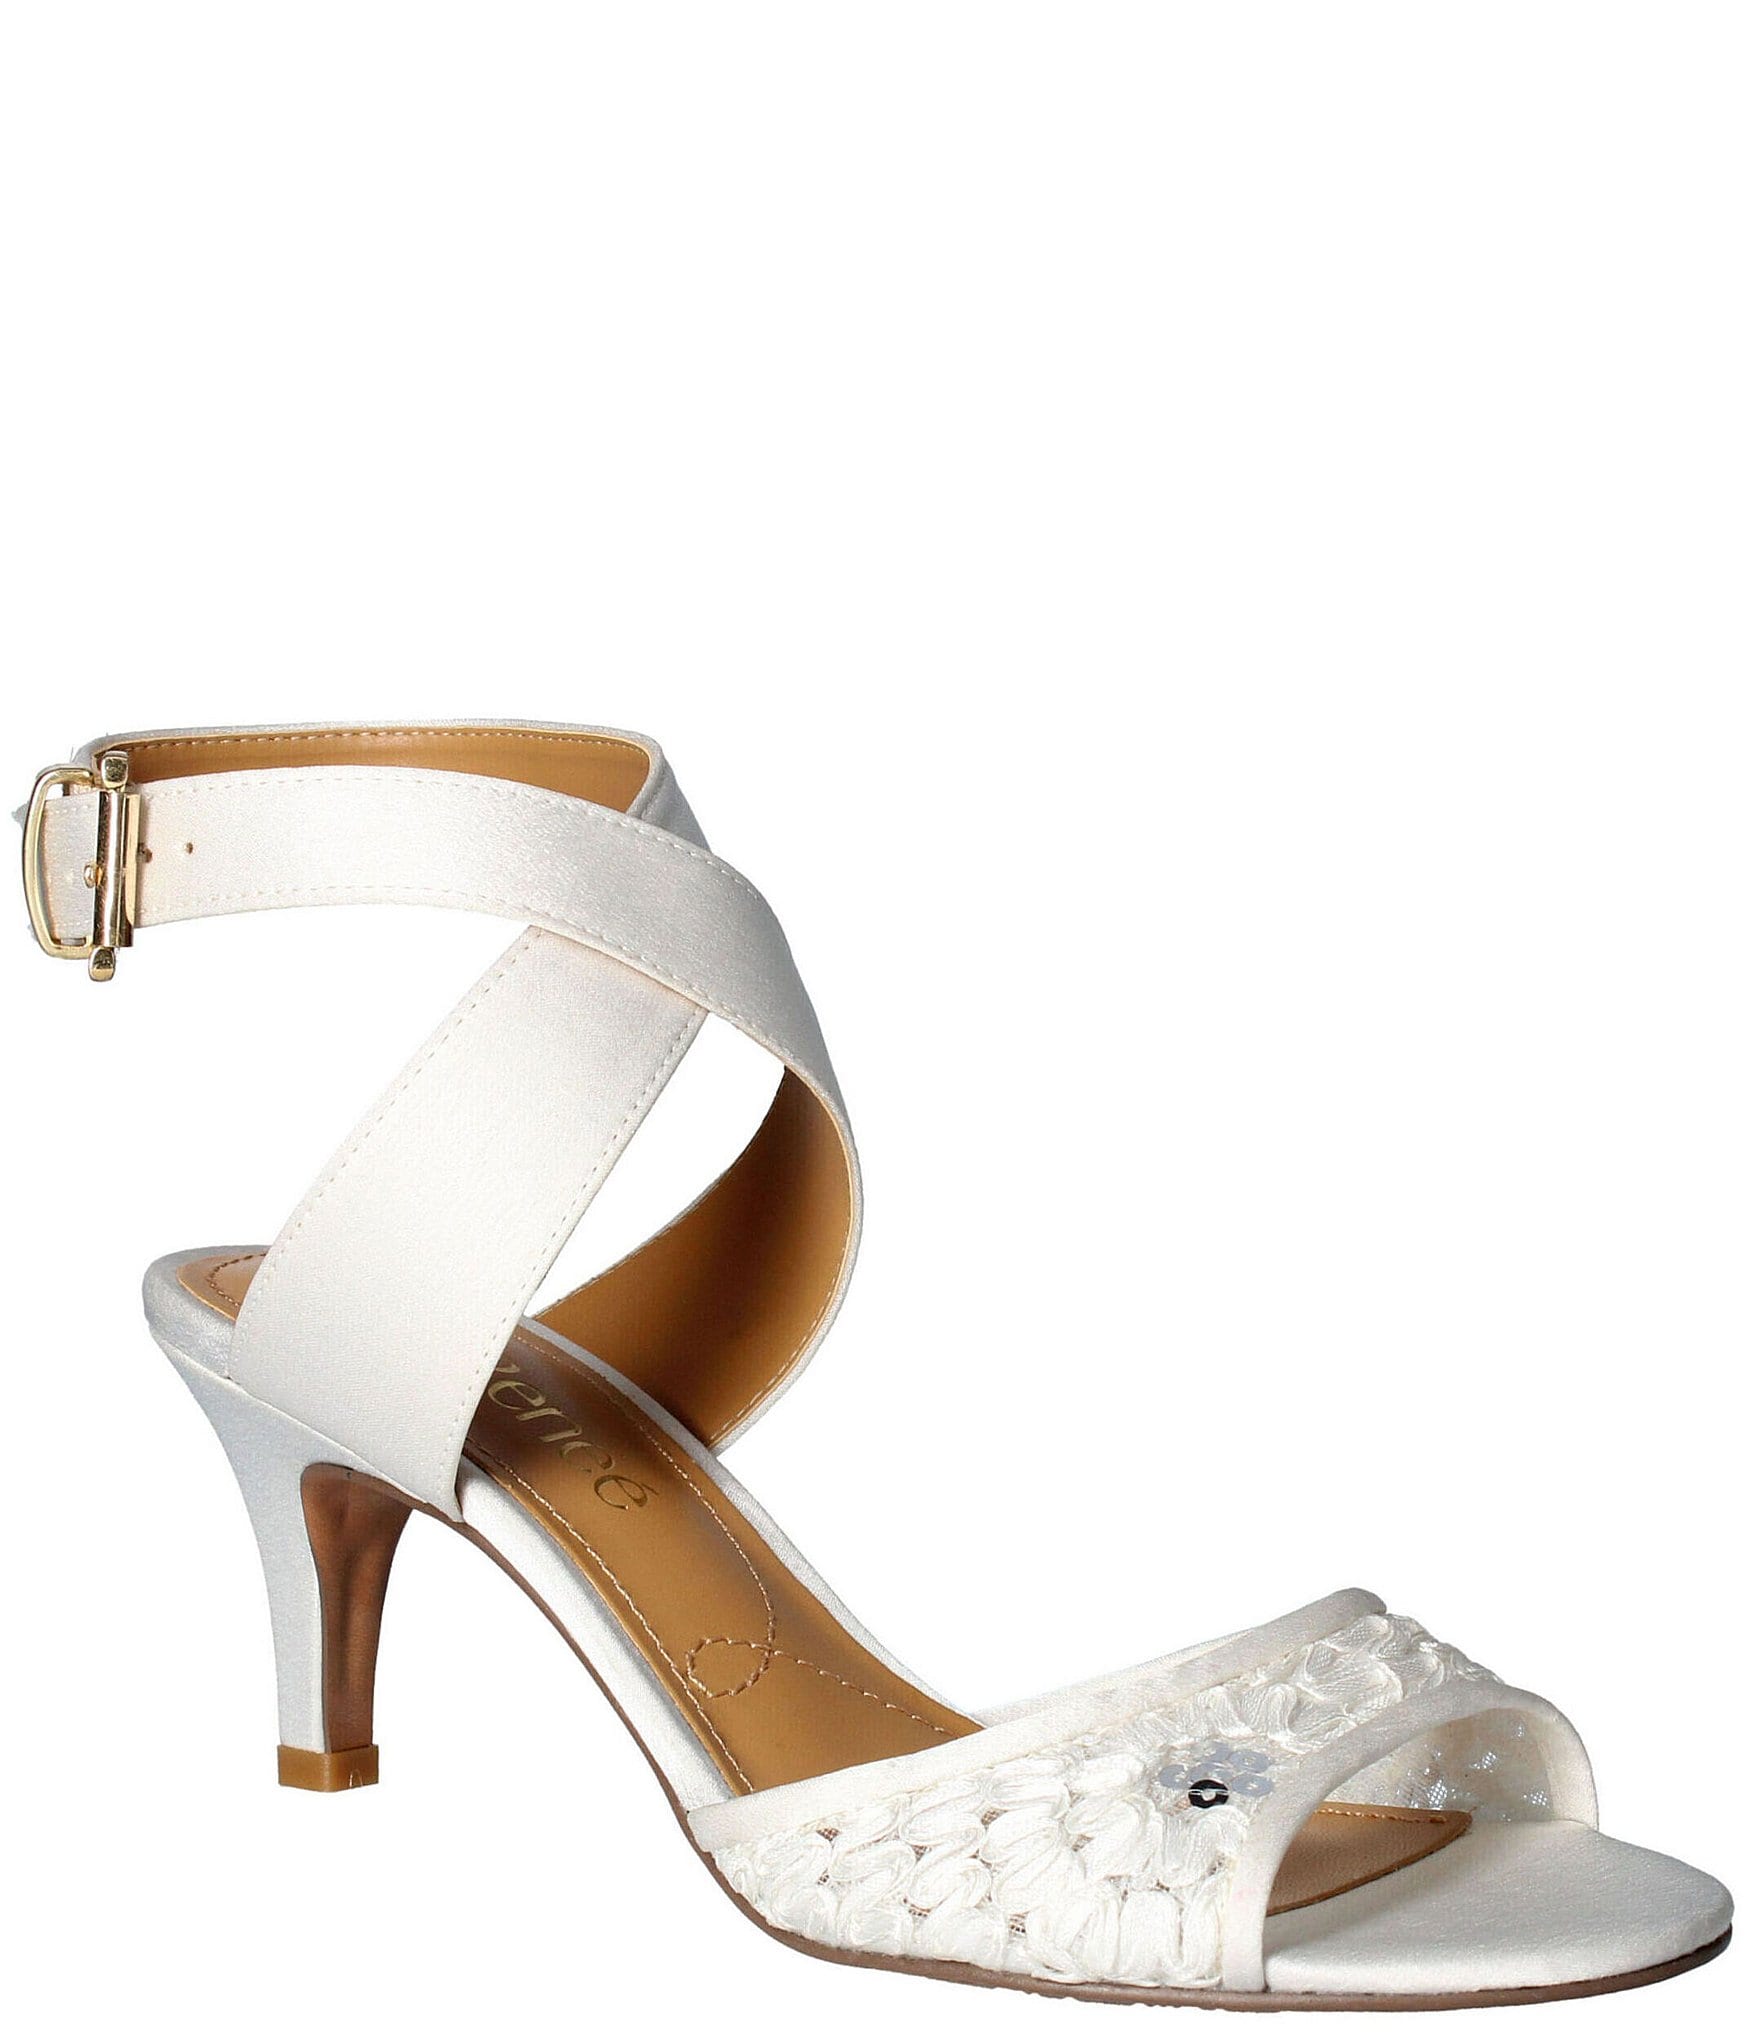 Sociaal compressie De stad white sandals: Women's Shoes | Dillard's